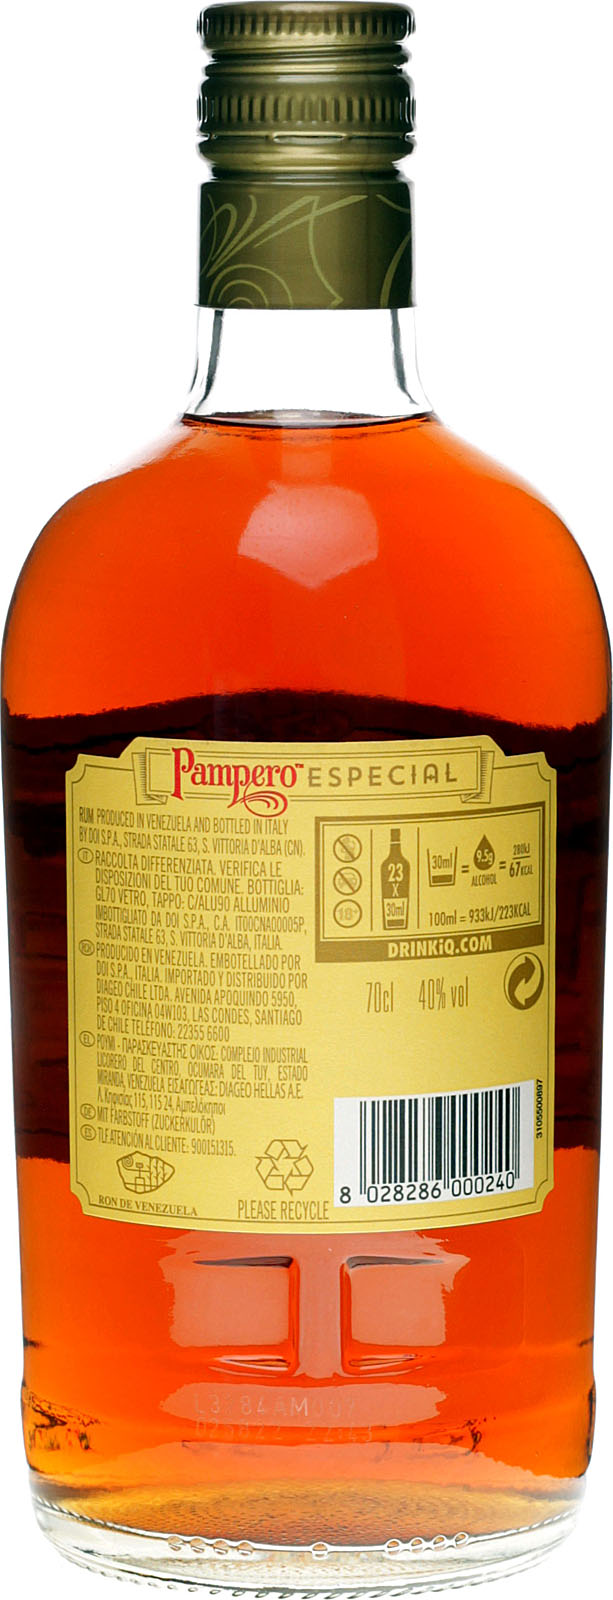 Pampero Liter Anejo mit Especial 0,7 kaufen Ron